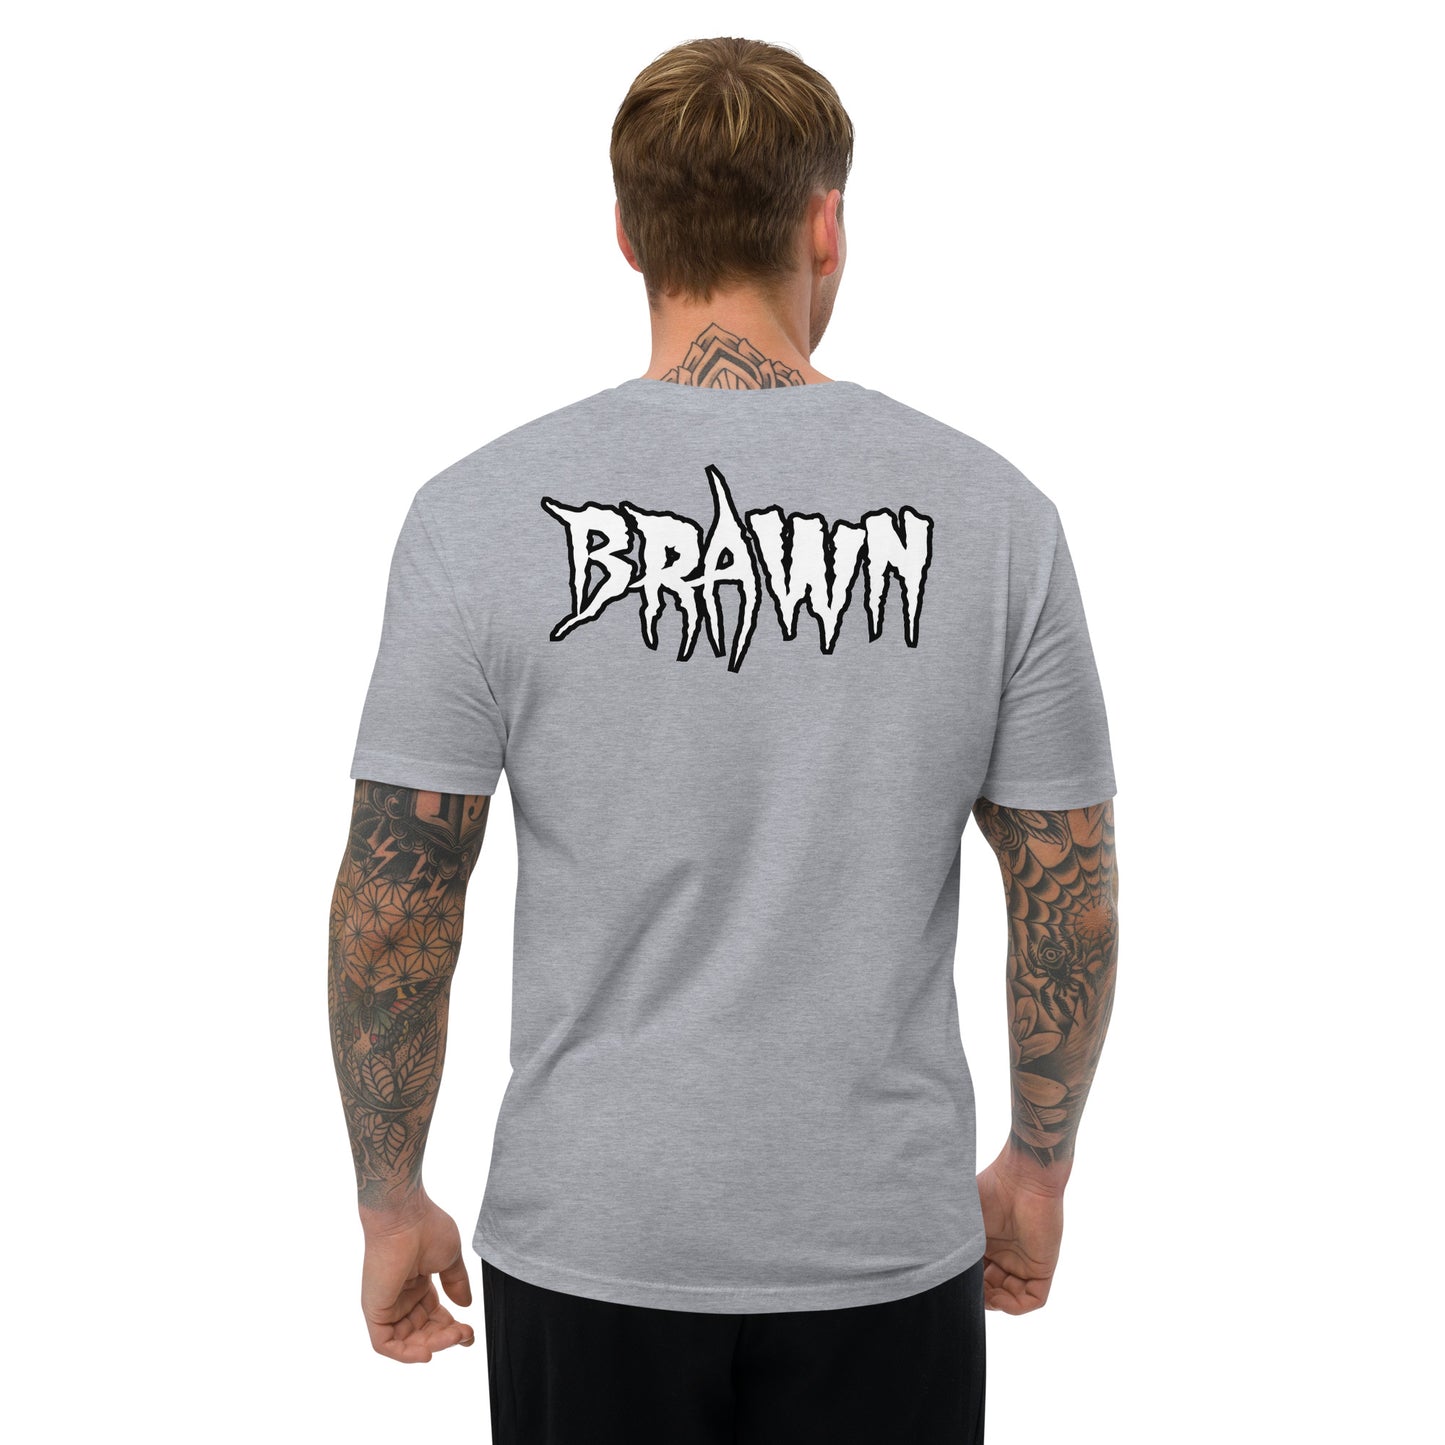 Captain BRAWN T-shirt